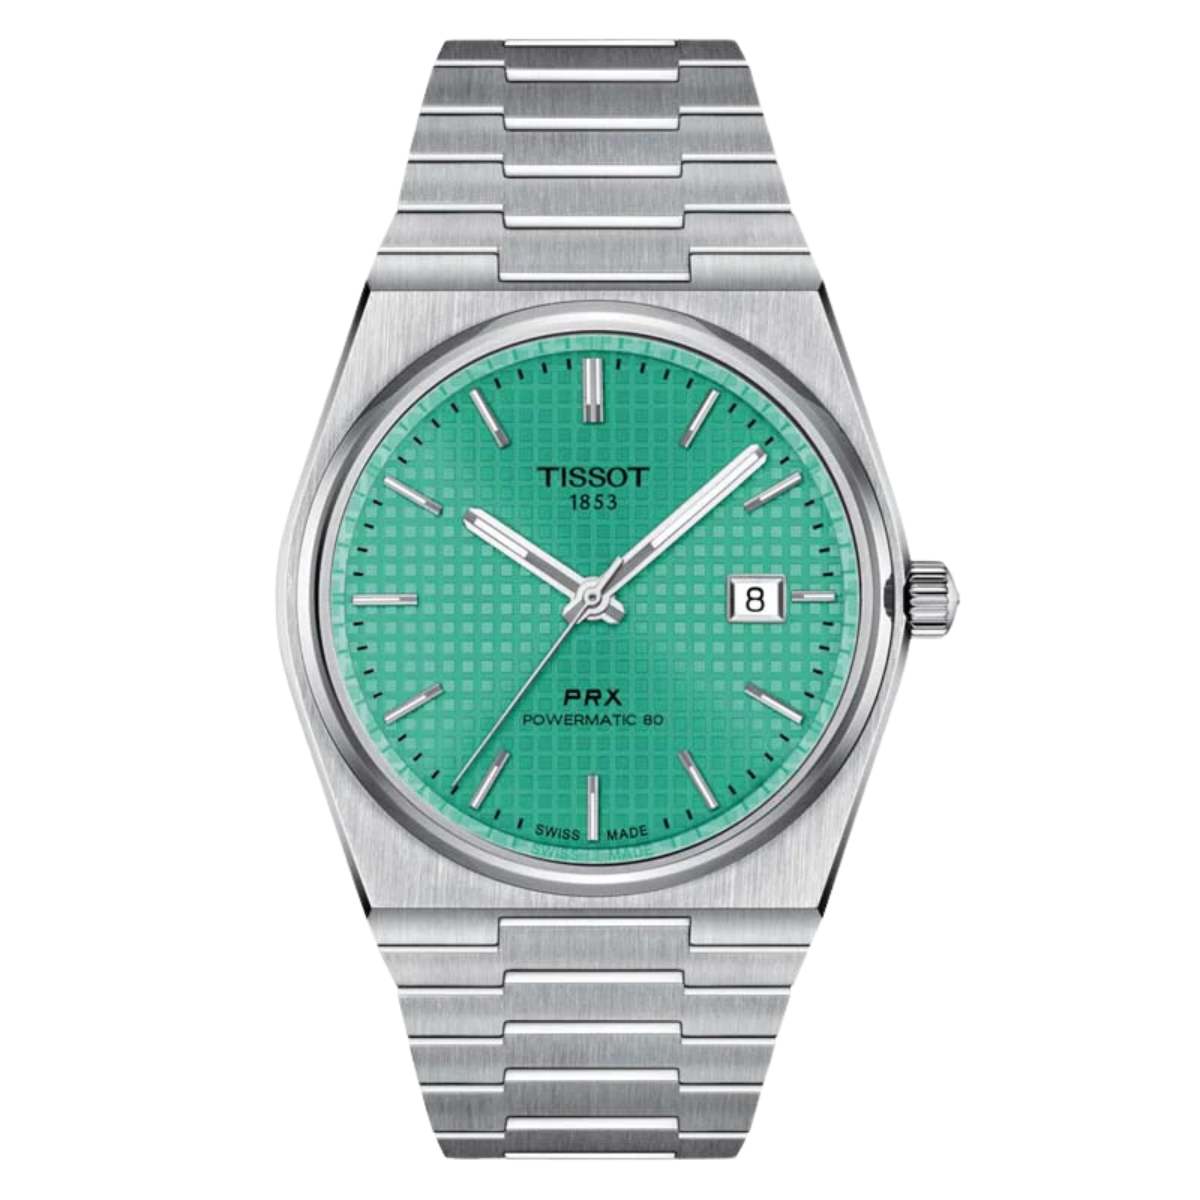 Tissot 1853 PRX T1374071109101 T137.407.11.091.01 Powermatic 80 40MM Light Green Dial Watch